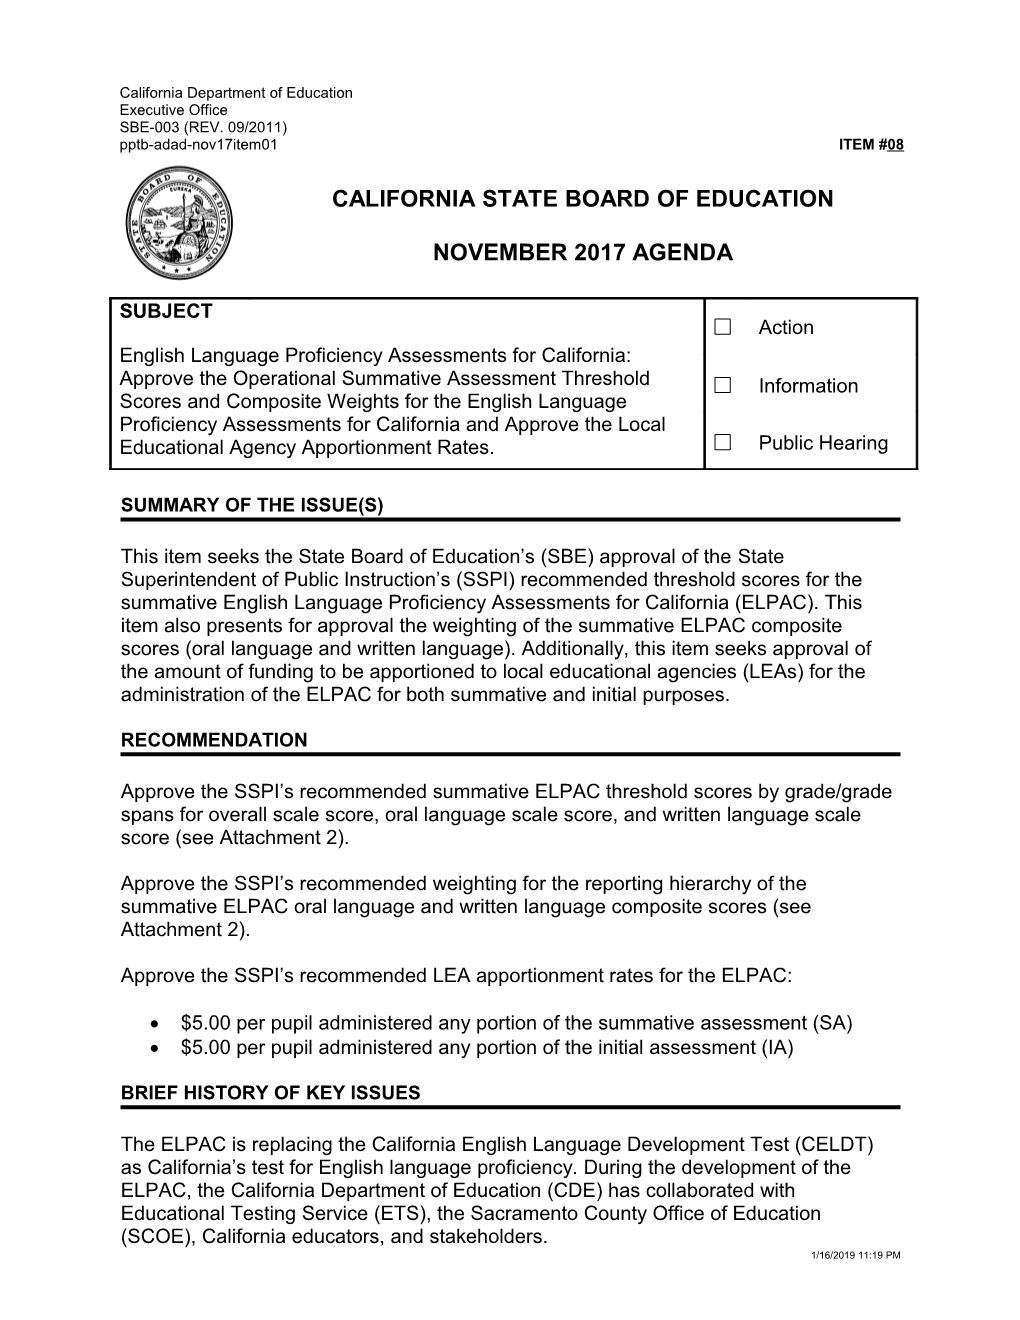 November 2017 Agenda Item 08 - Meeting Agendas (CA State Board of Education)